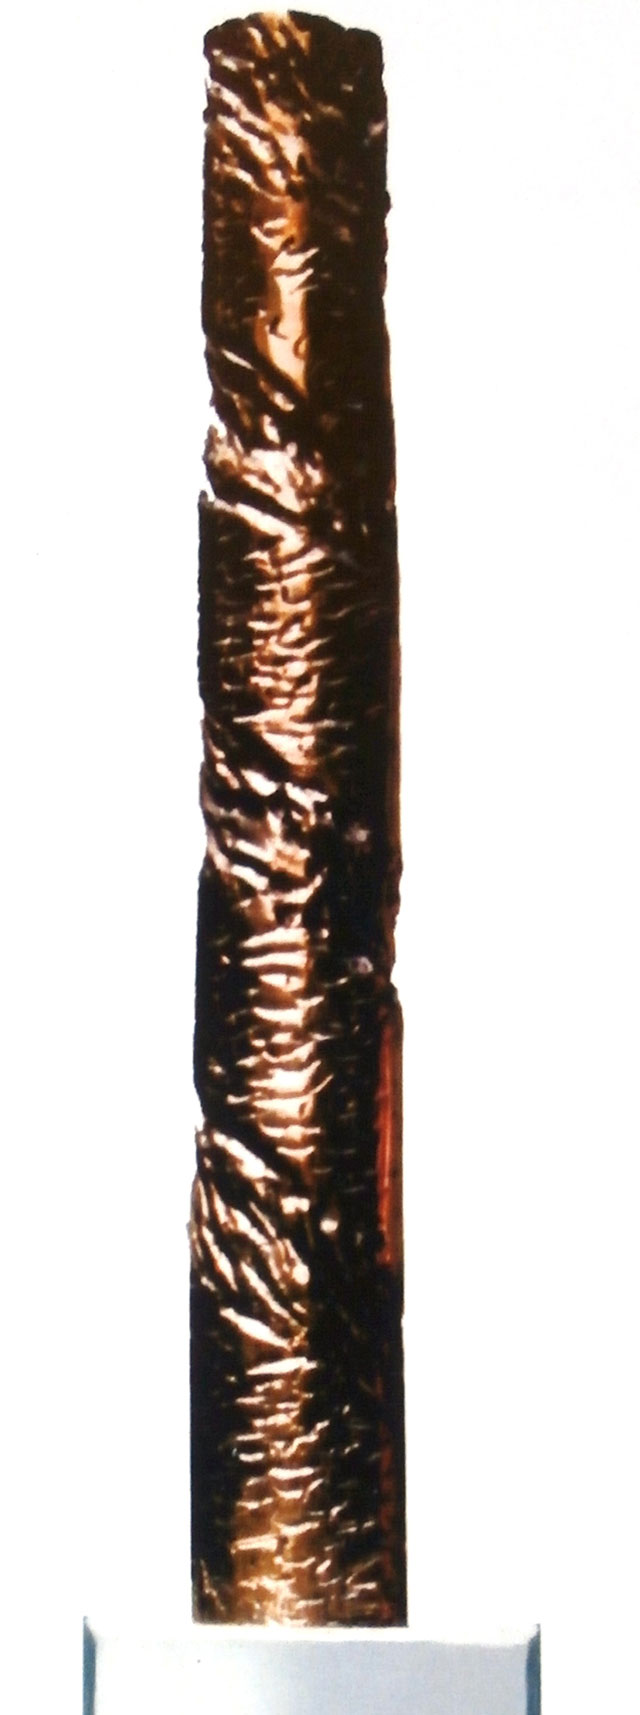 Stele,
bronzo,
38x15cm,
1992